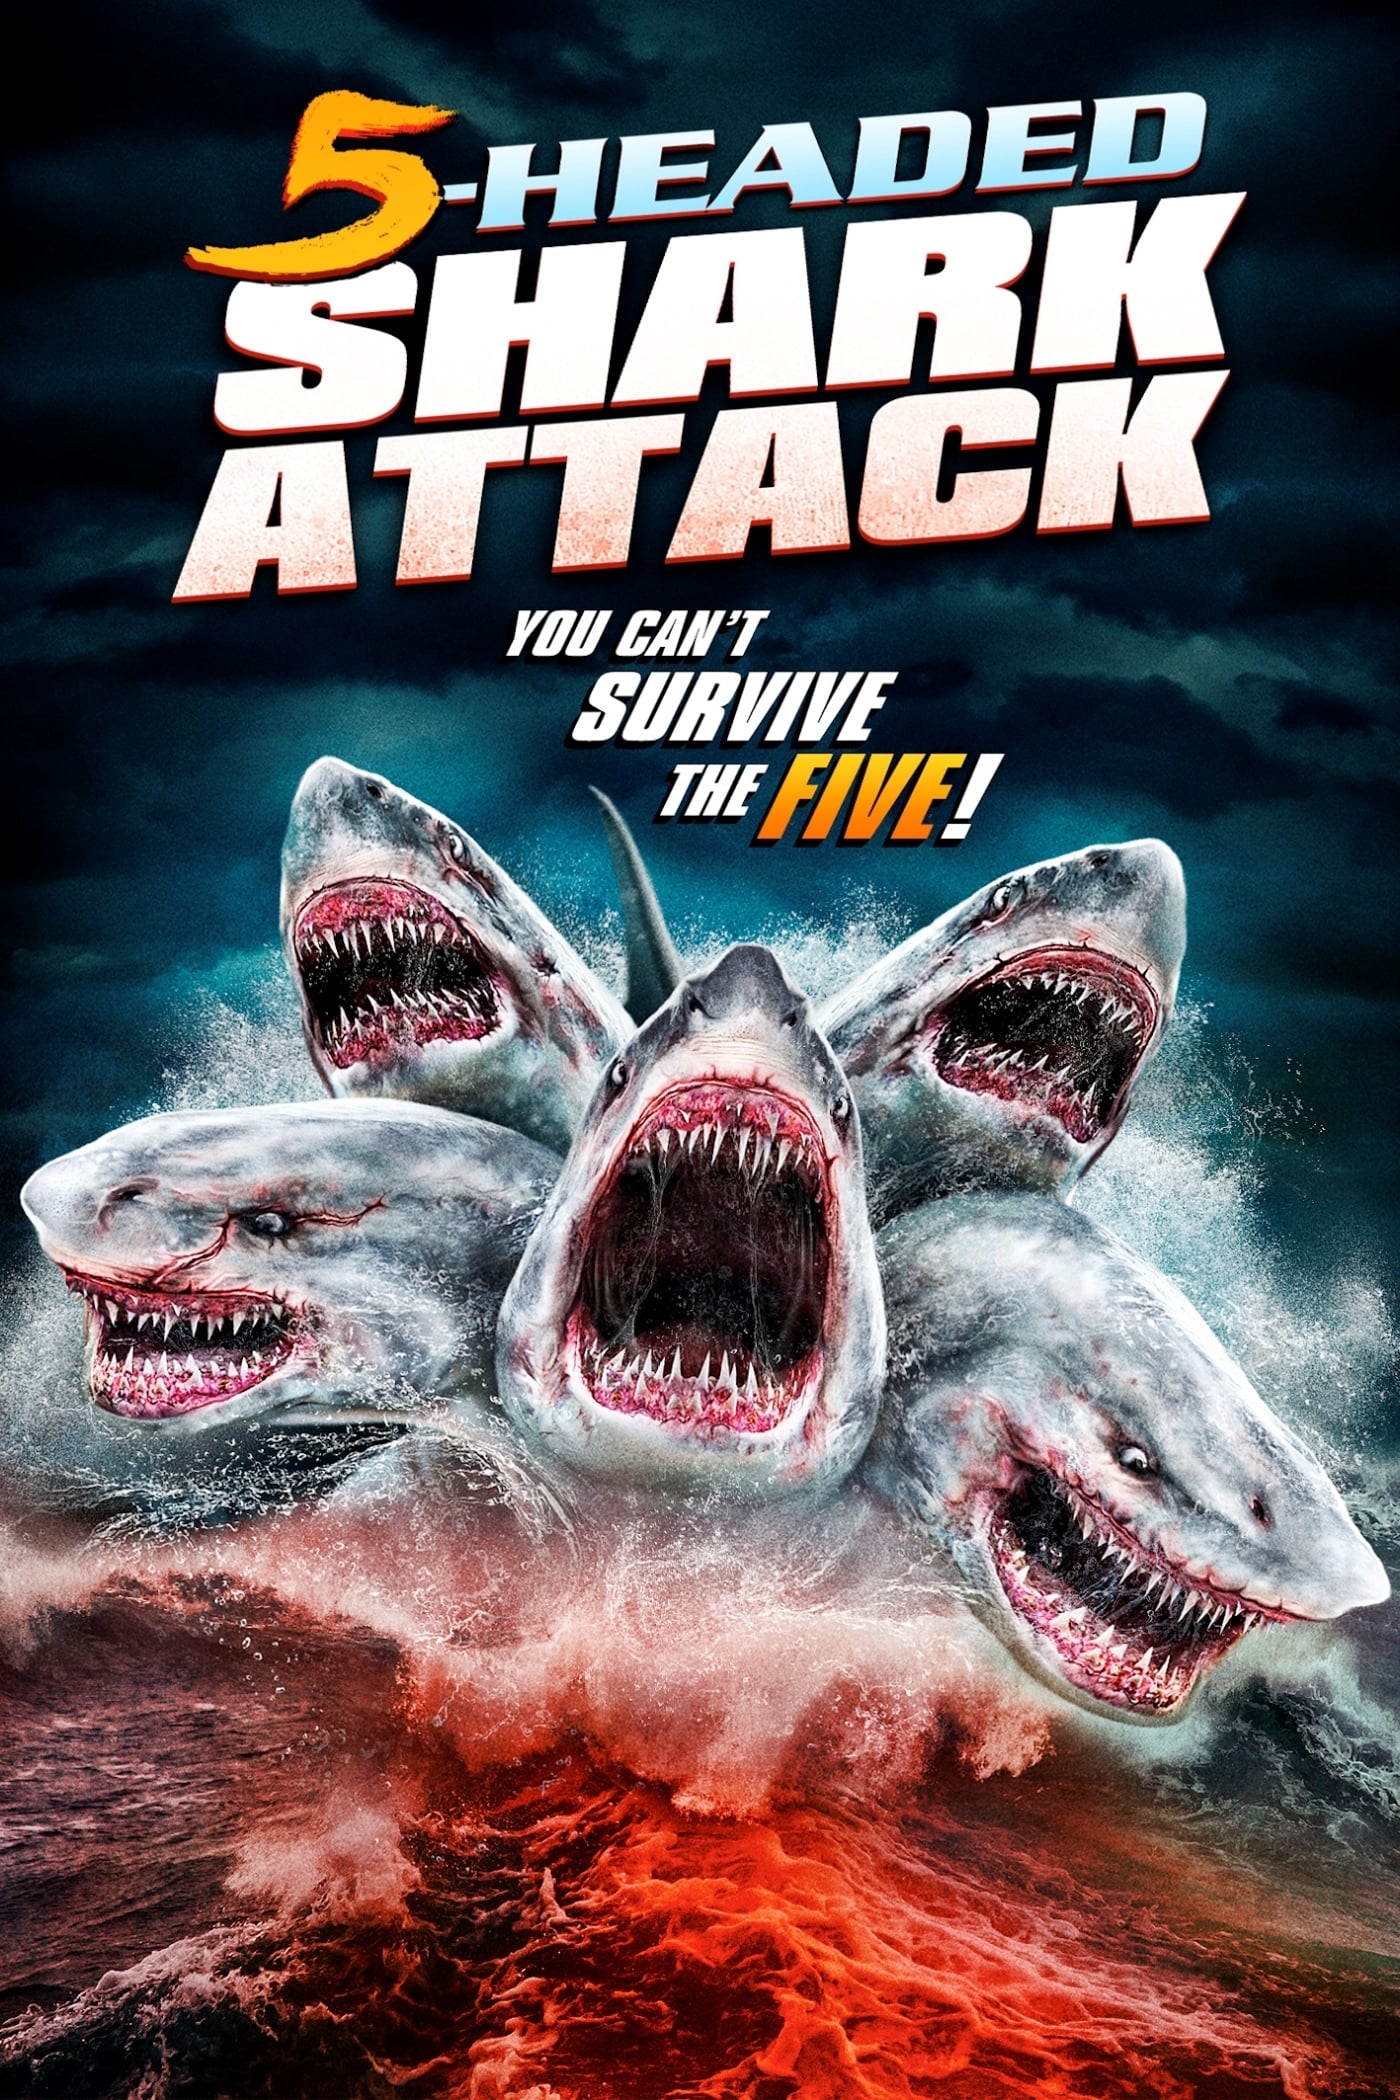 Нападение шестиглавой акулы 2018. Нападение пятиглавой акулы / 5 headed Shark Attack (2017). Атака МЕГАЛОДОНА.